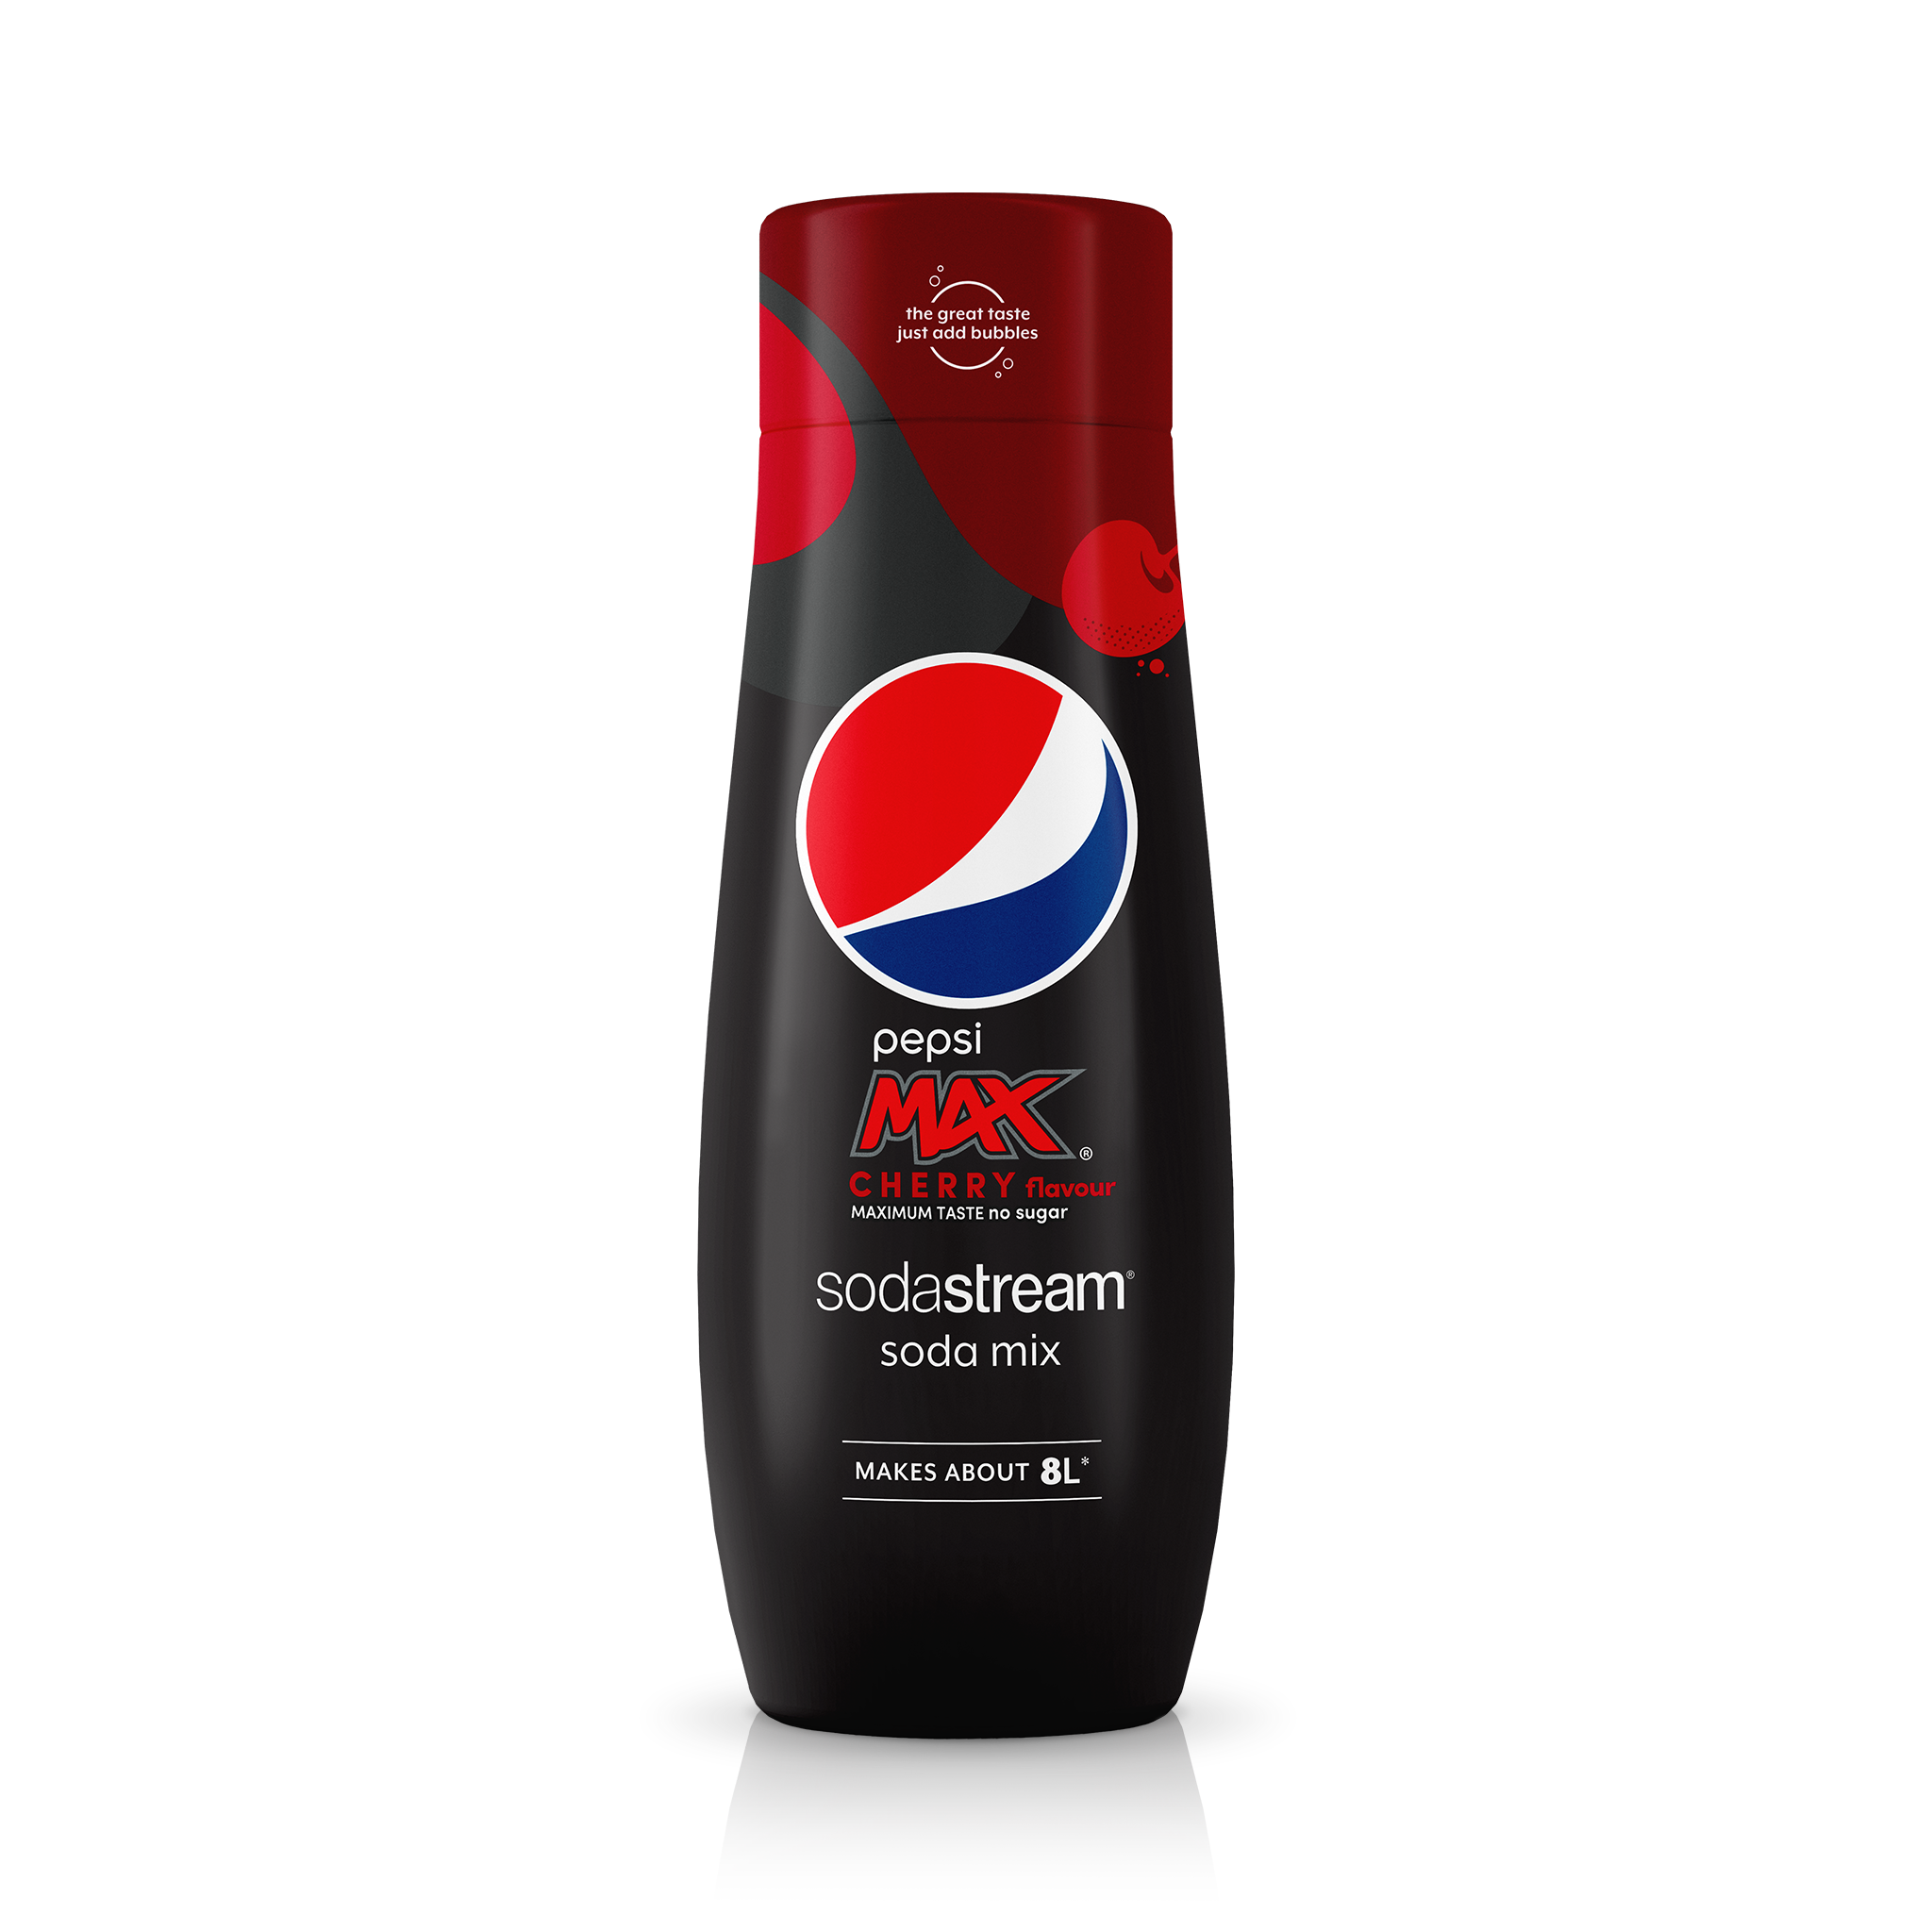 Pepsi Max Cherry sodastream